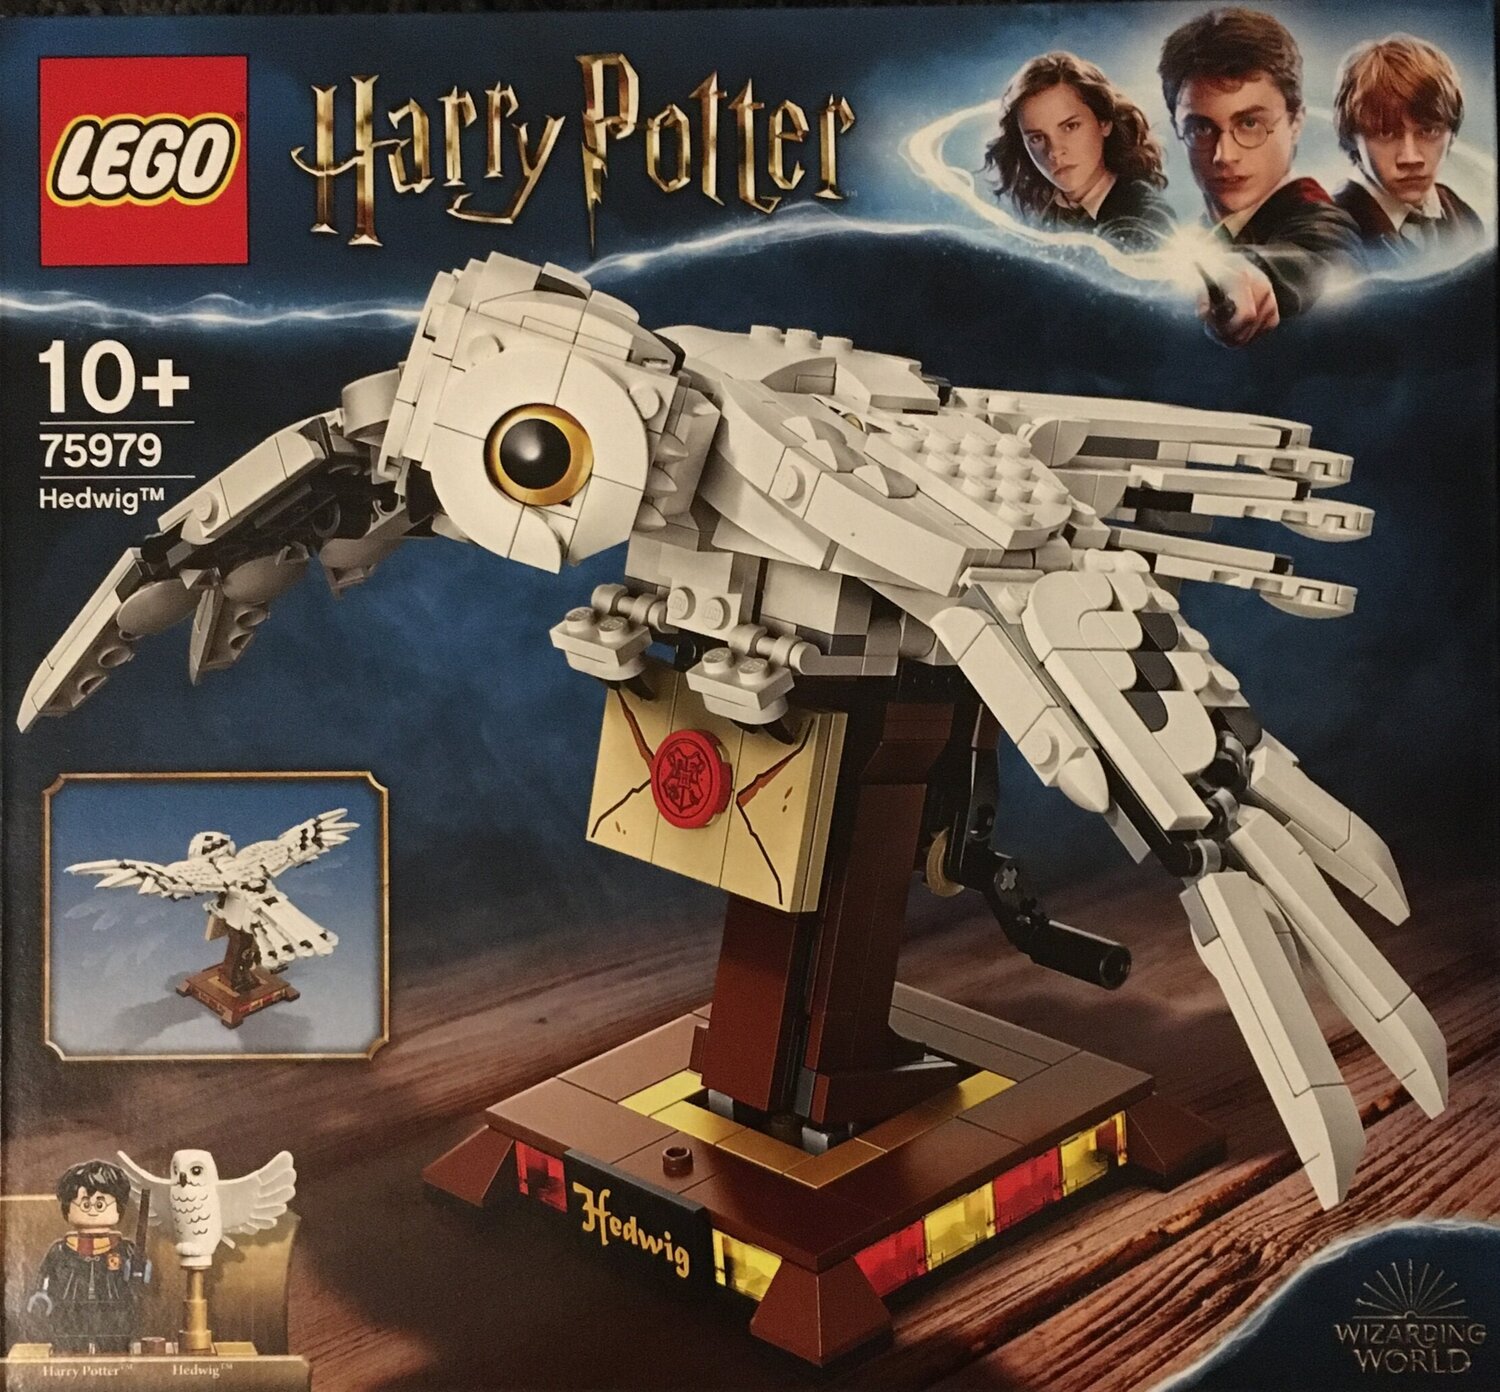 LEGO HARRY POTTER 75979 Hedwige la chouette Review Speebuild Owl Hedwig 